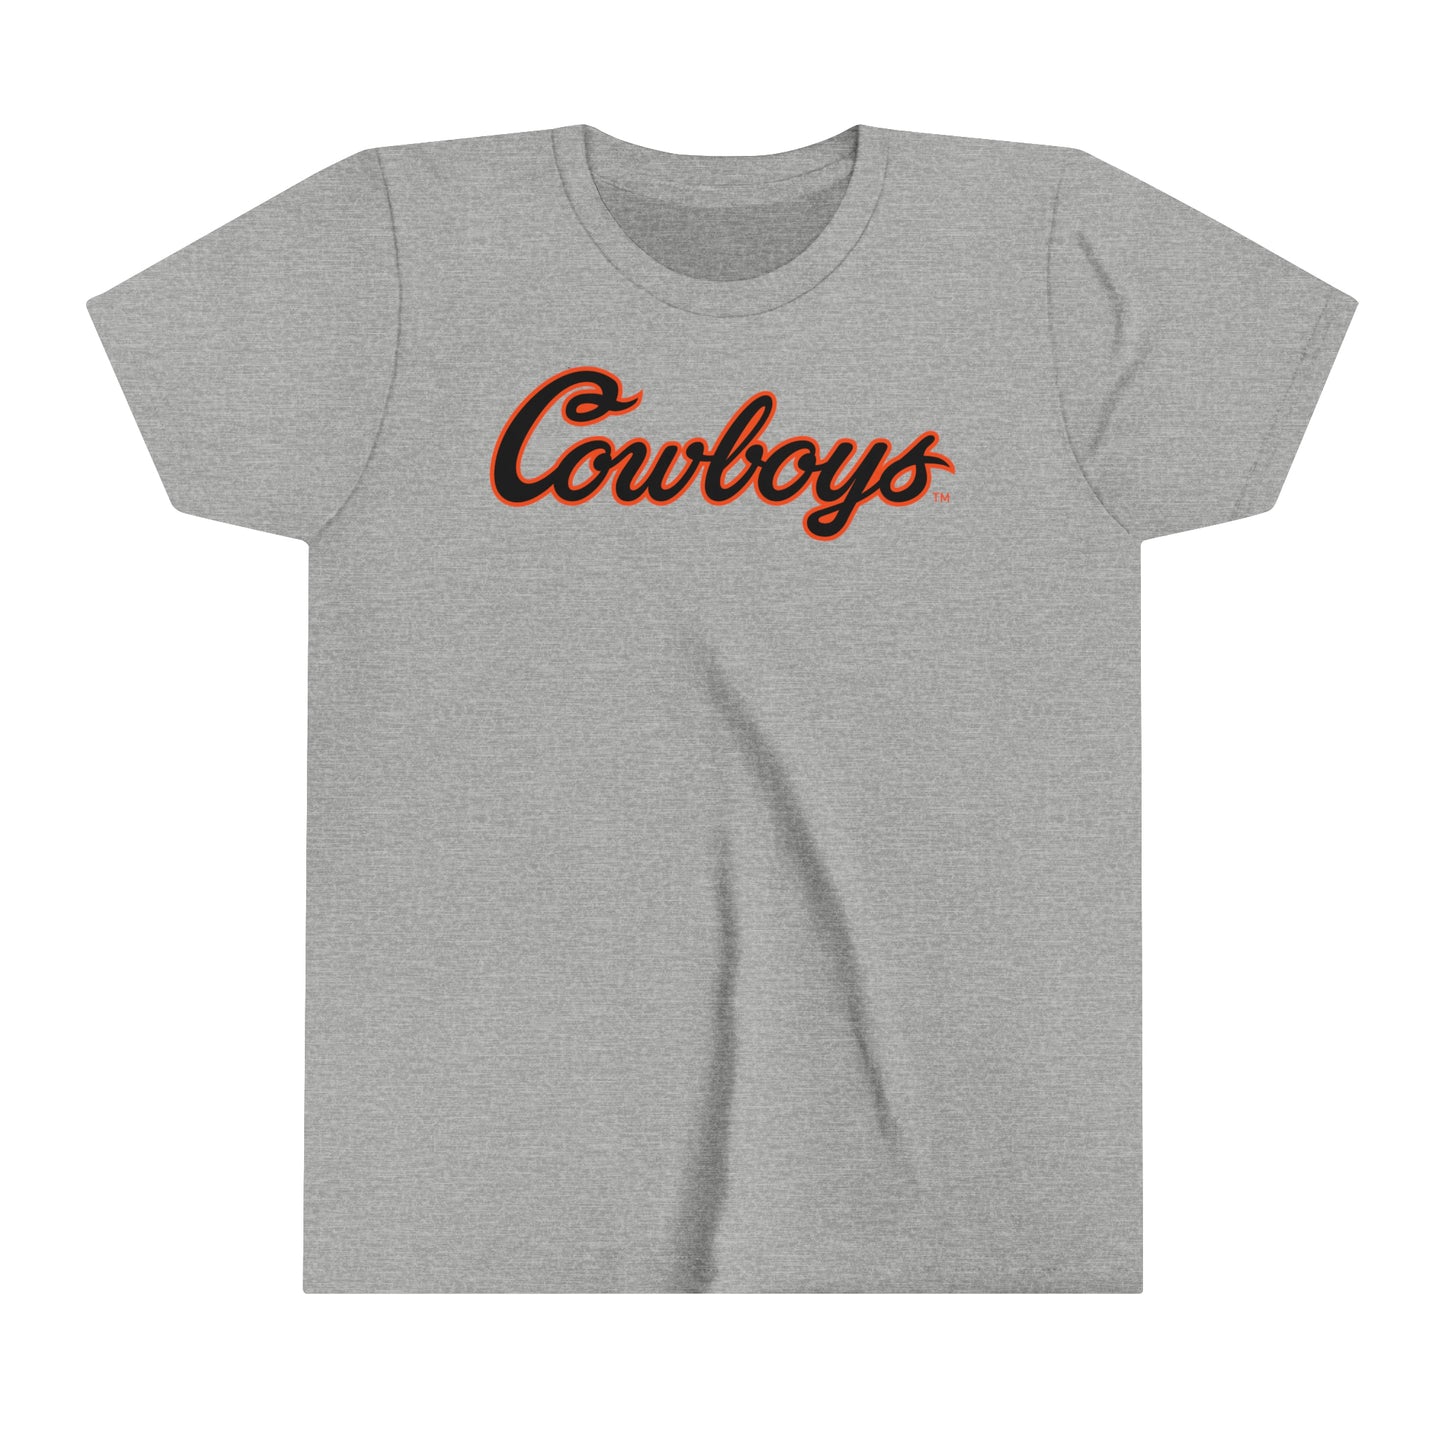 Ollie Gordon II #0 Cursive Cowboys Youth T-Shirt